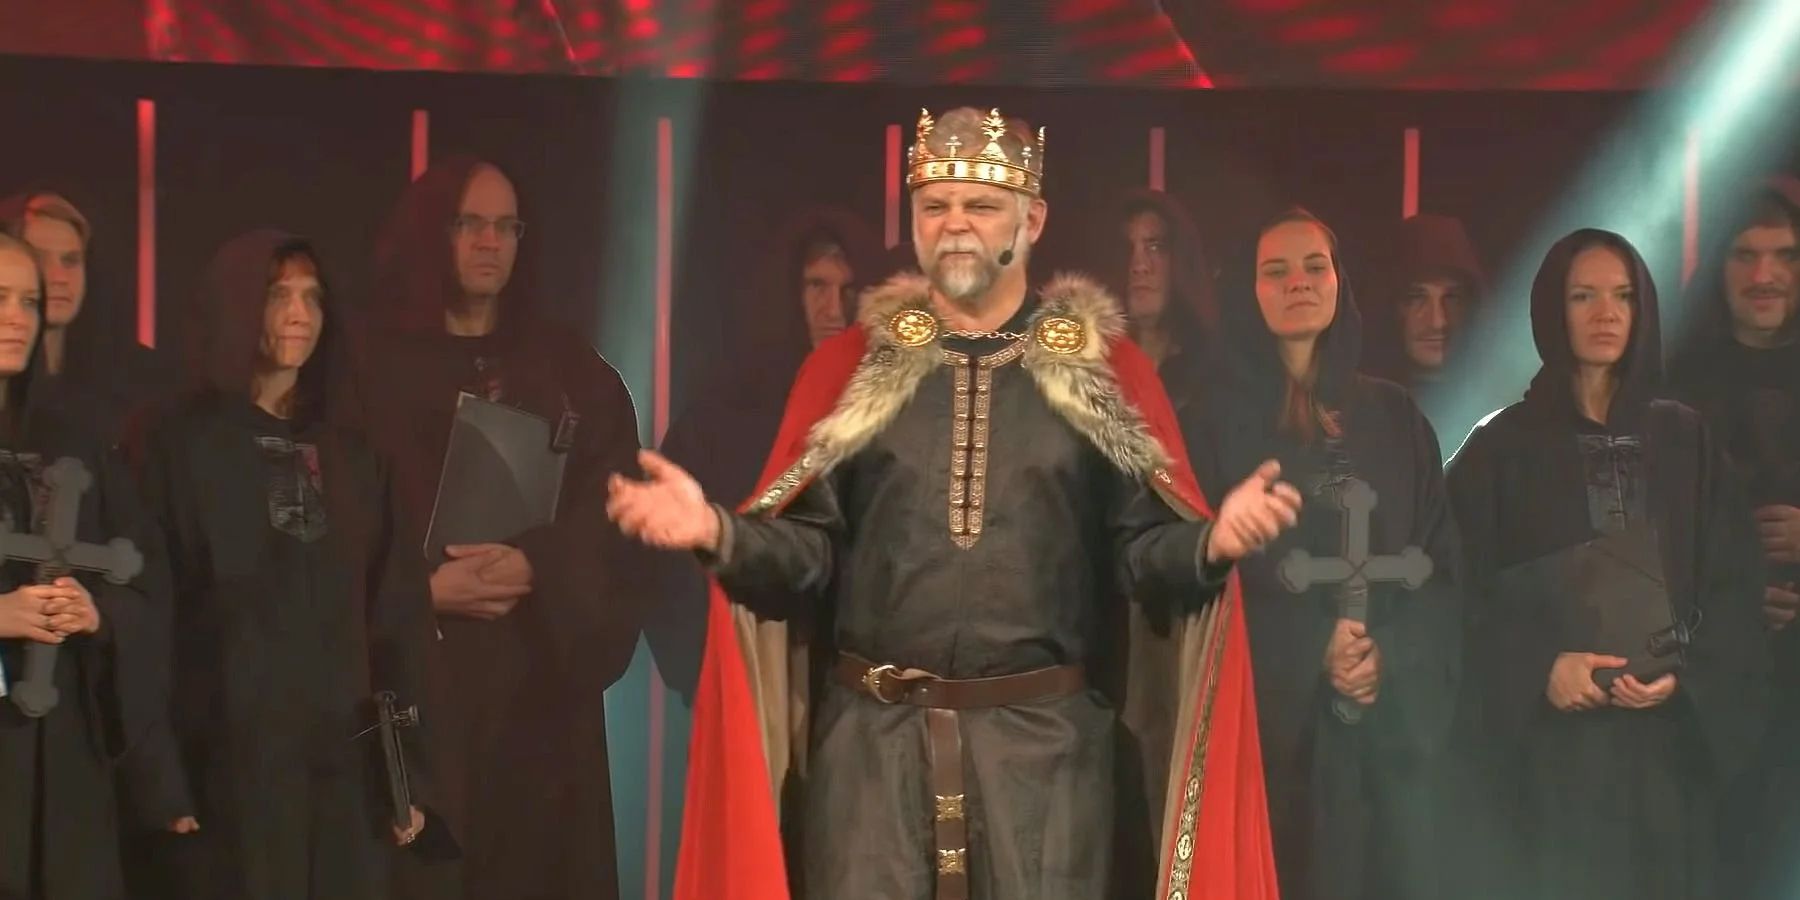 Crusader Kings 3 A ruler and his followers